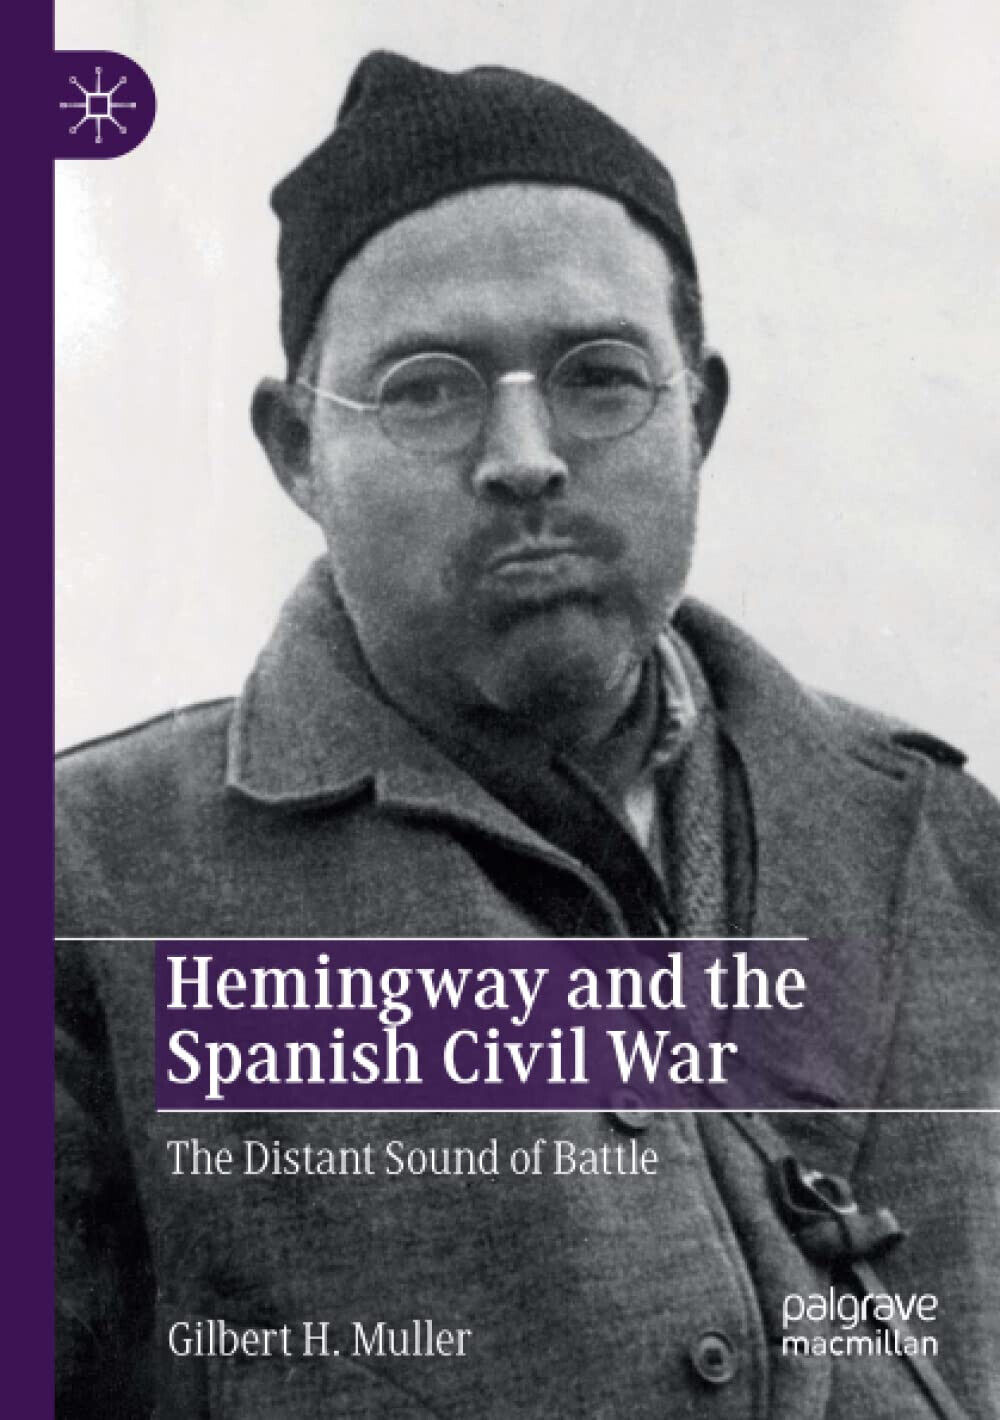 Hemingway and the Spanish Civil War - Gilbert H. Muller - palgrave, 2020